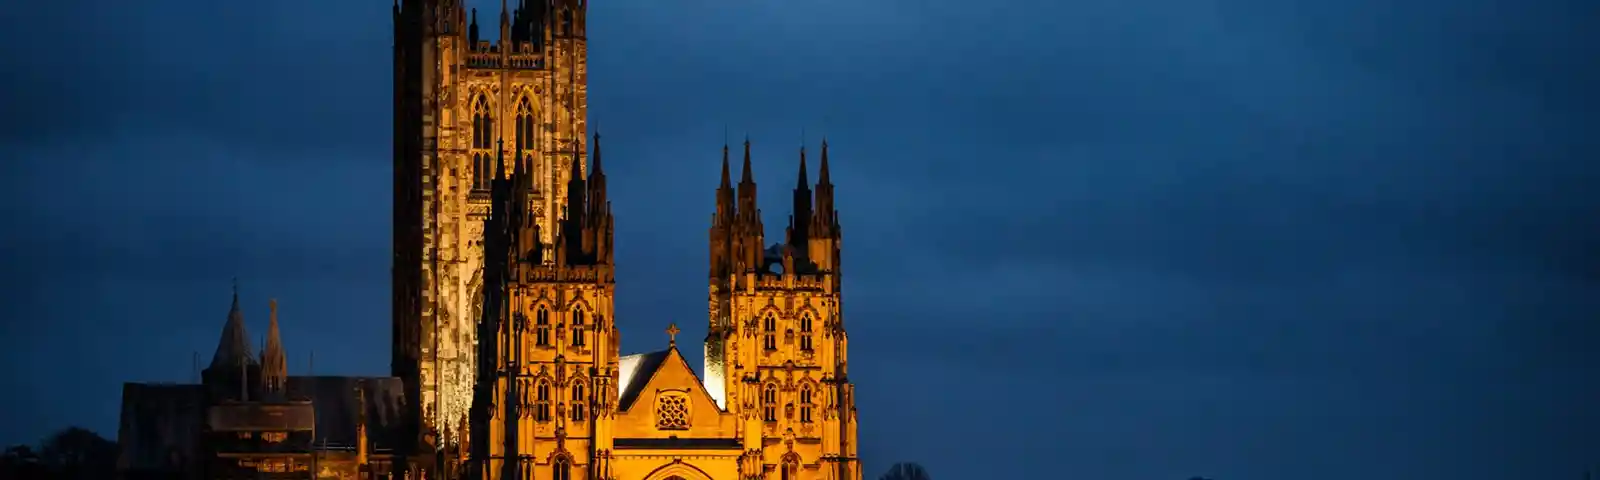 canterbury-cathedral-night.jpg